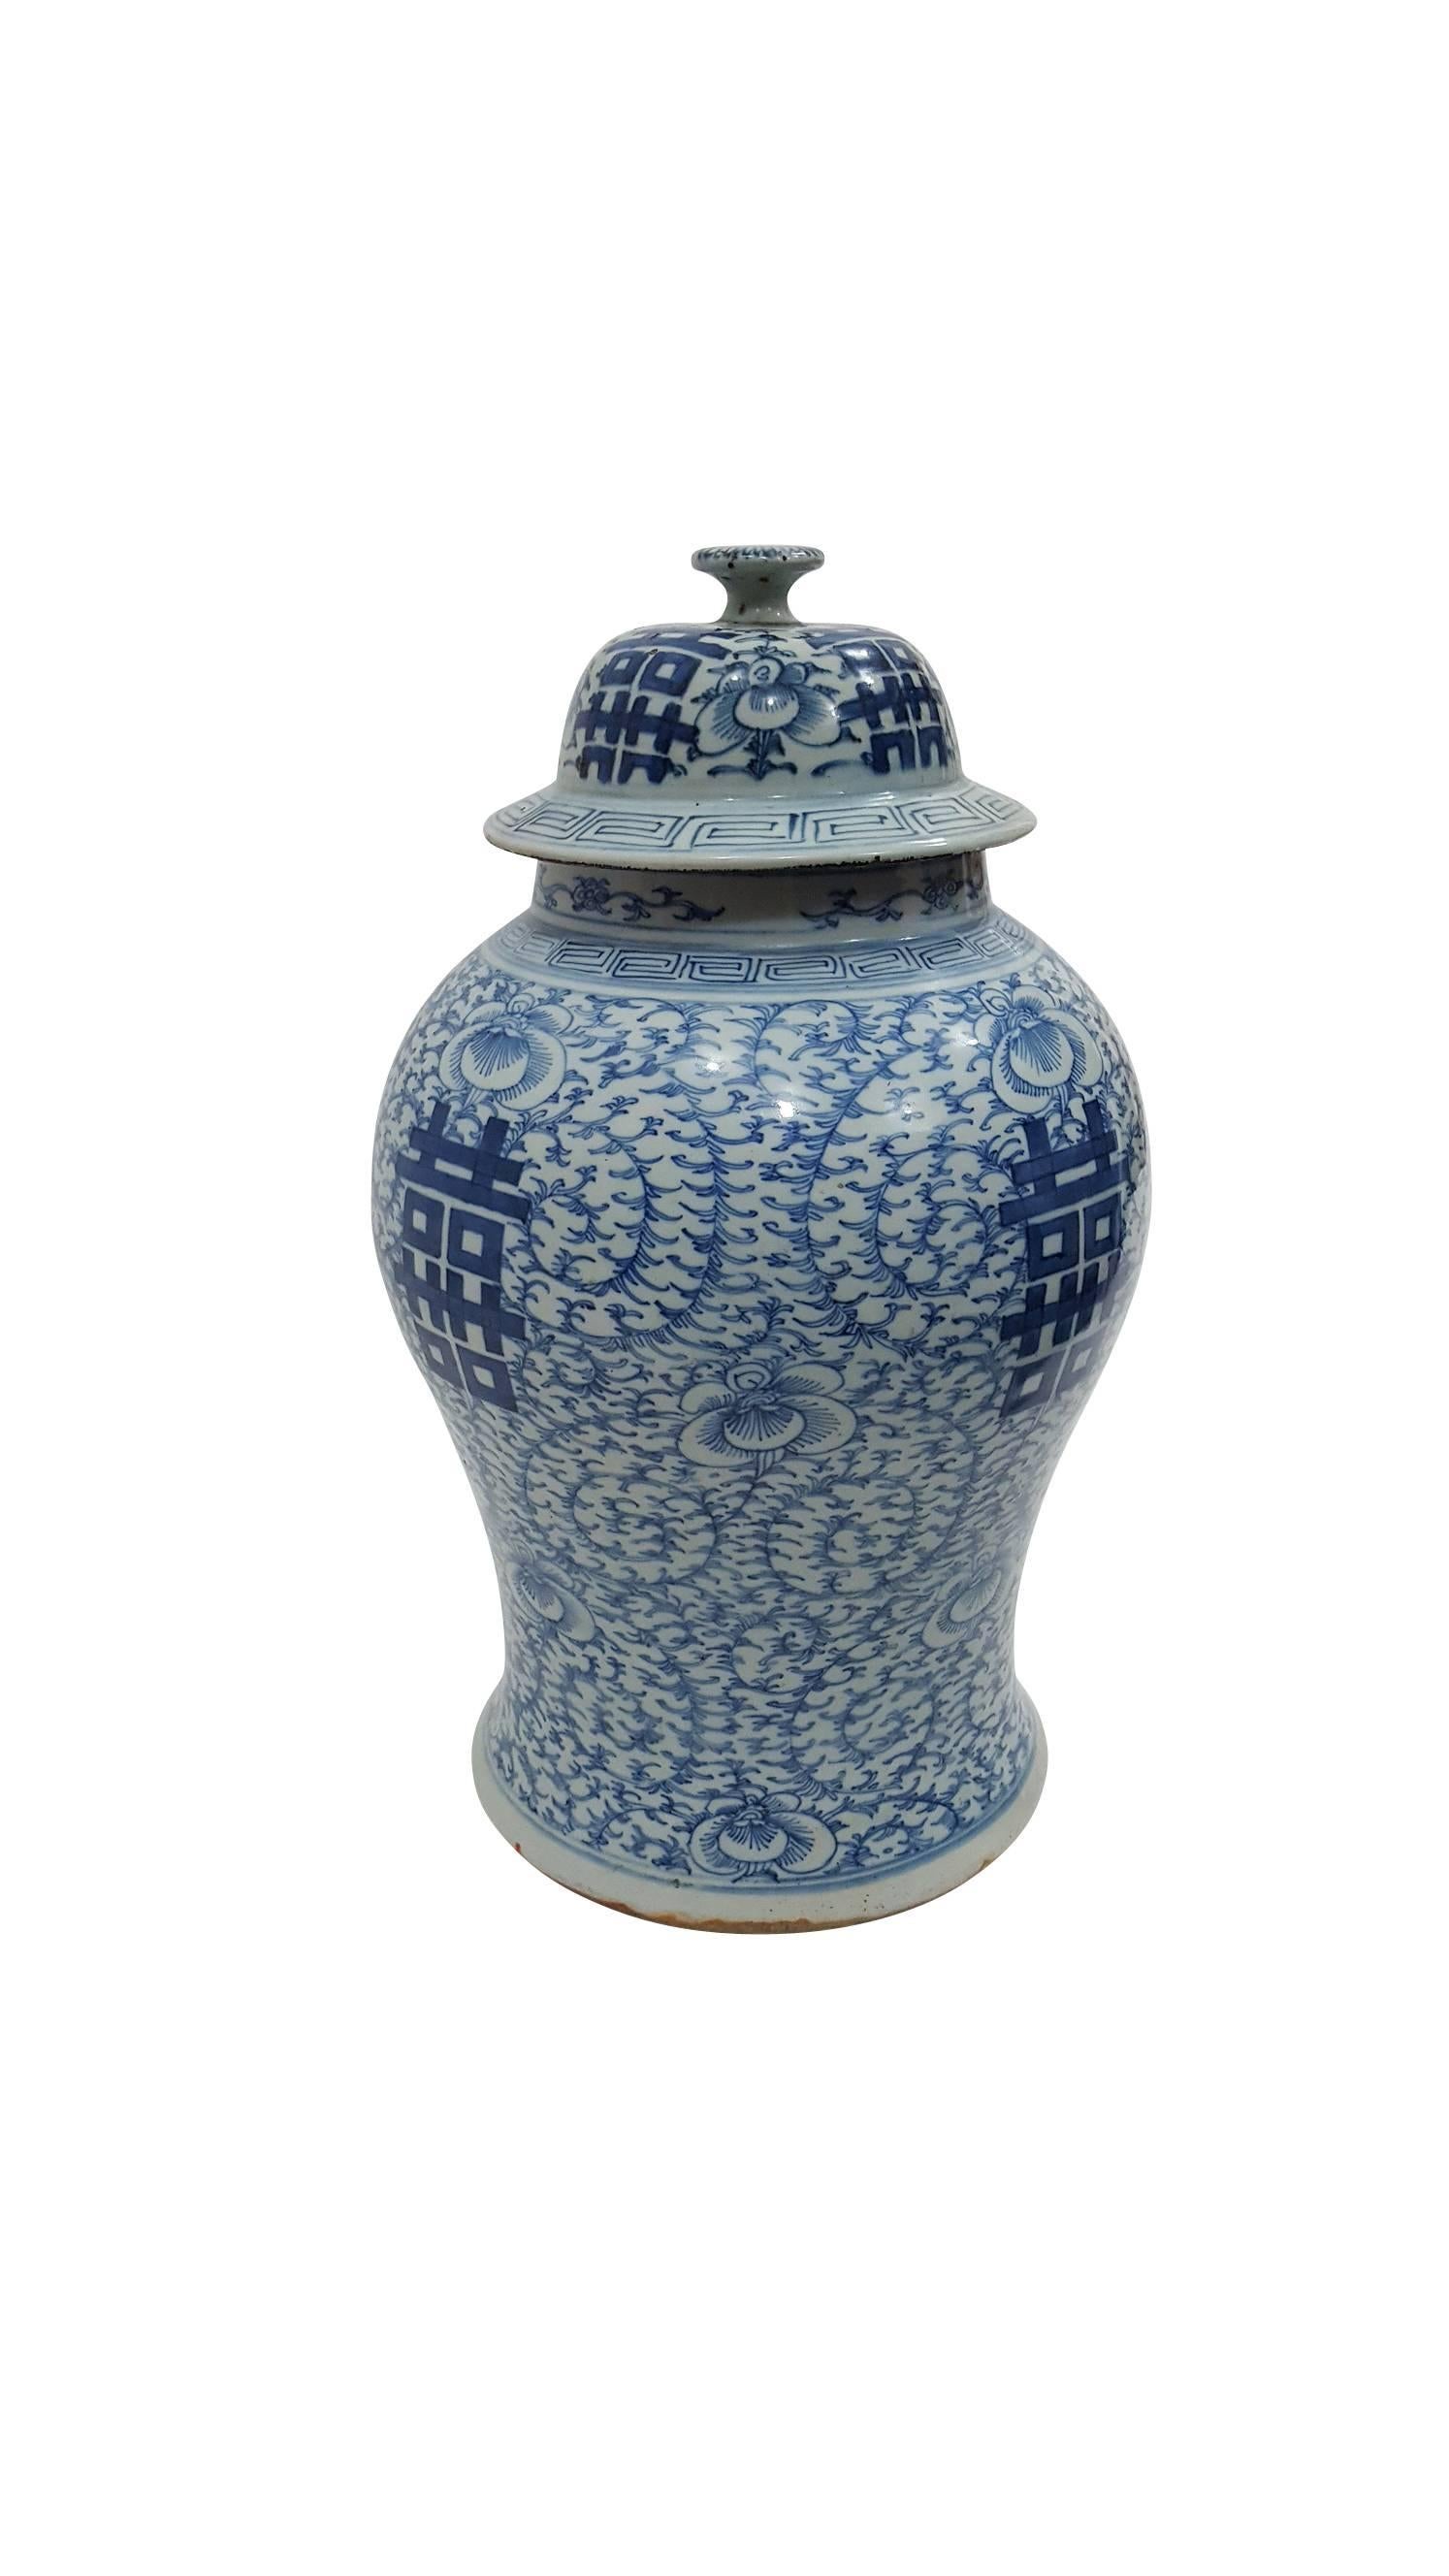 Gorgeous 19th century Chinese porcelain pot.